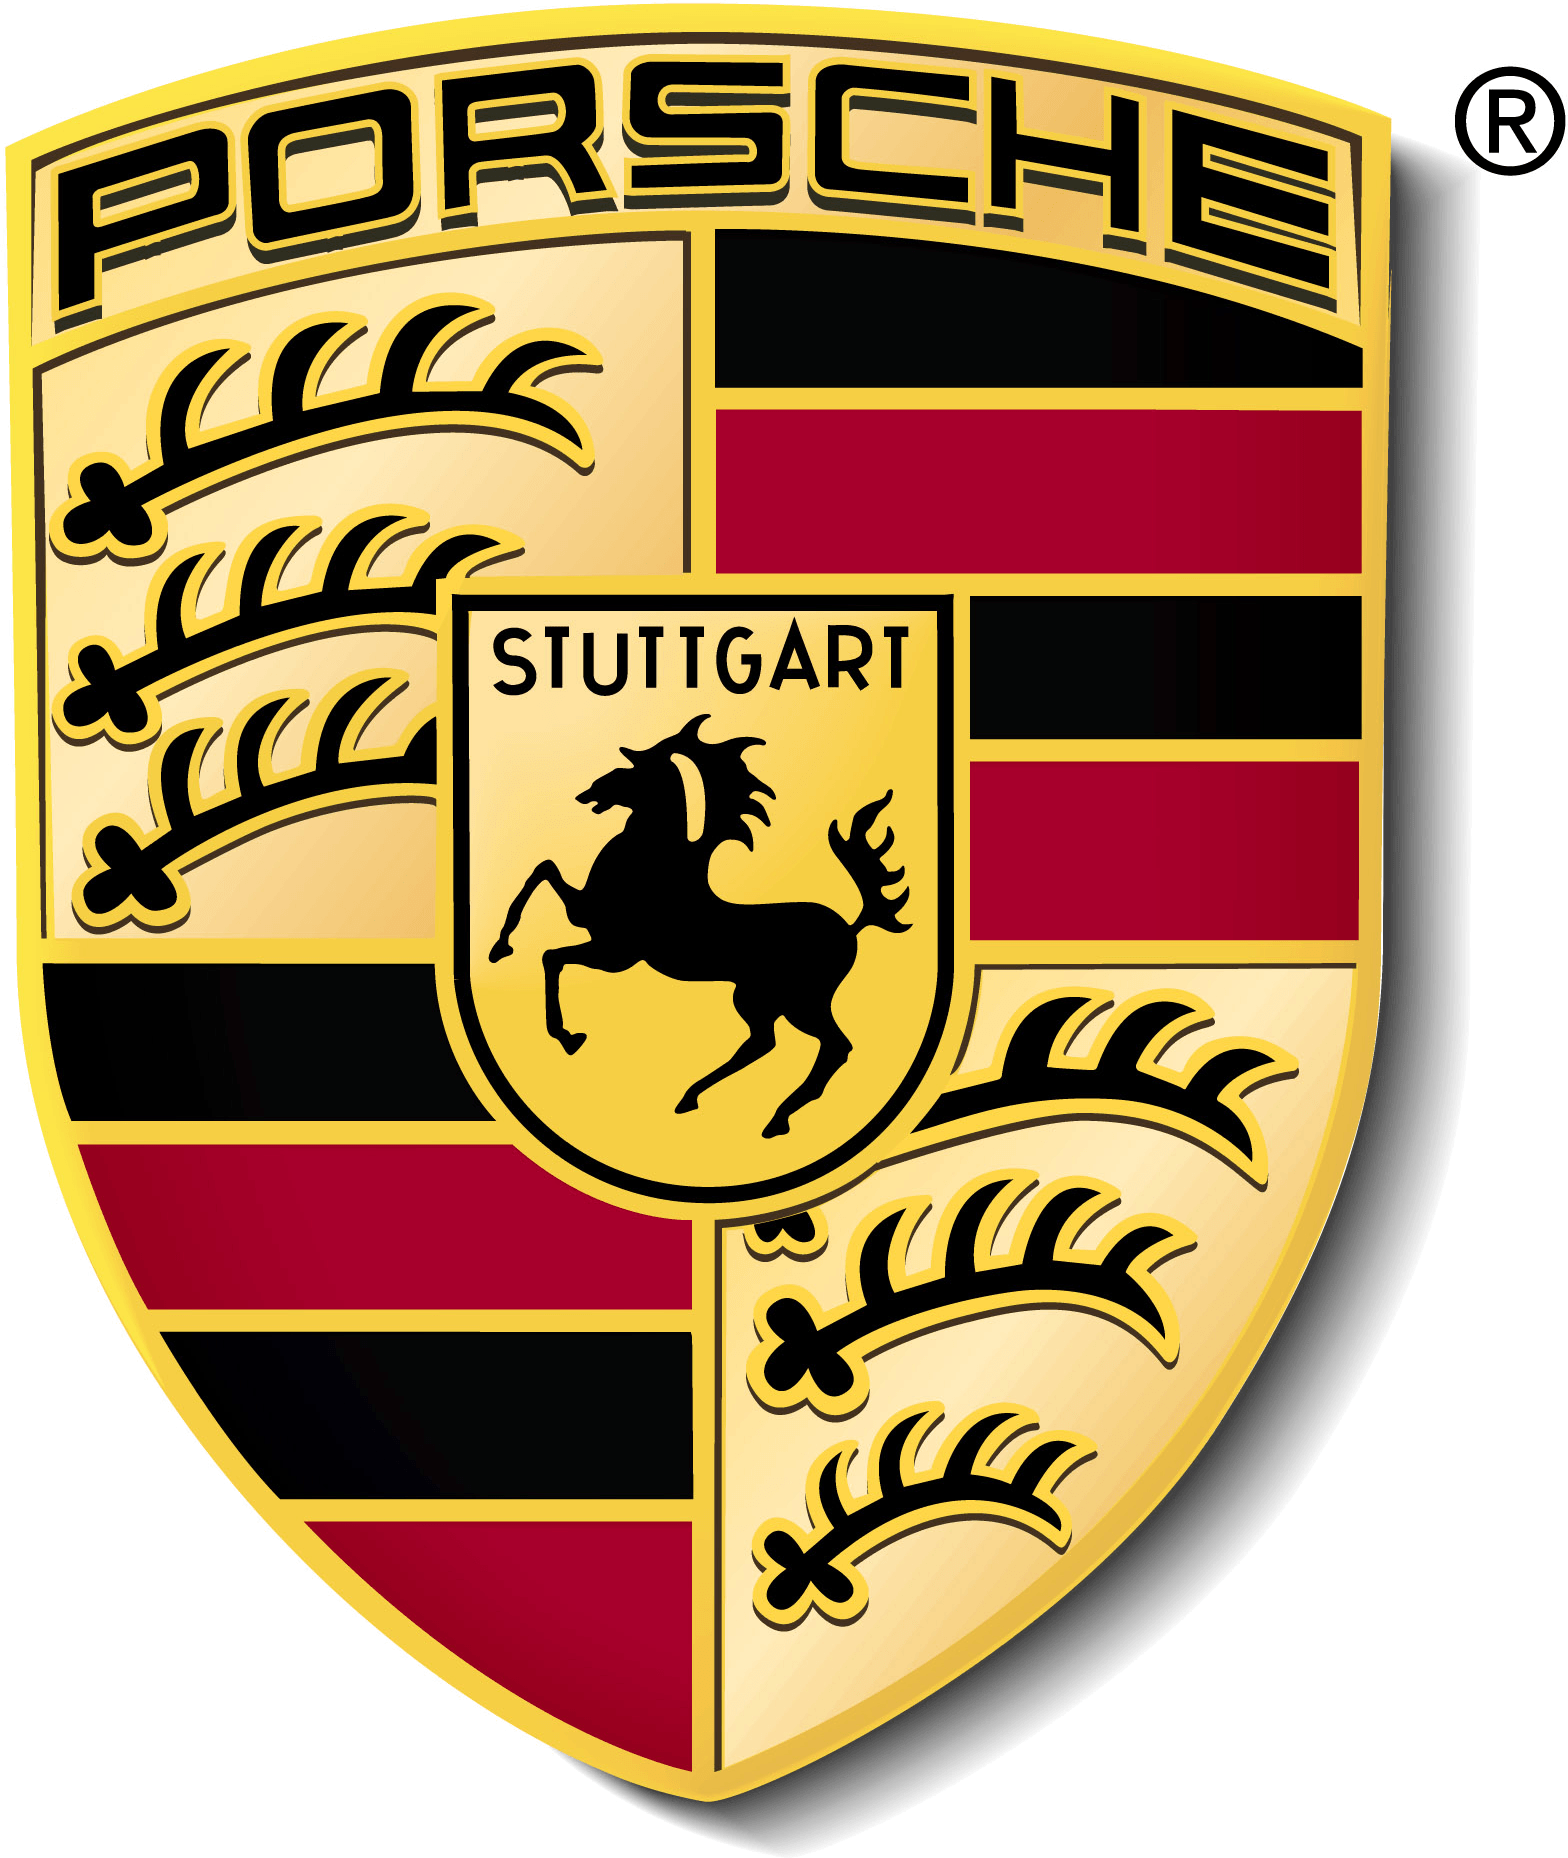 Porshe Logo - Image - Porsche logo.png | Logopedia | FANDOM powered by Wikia